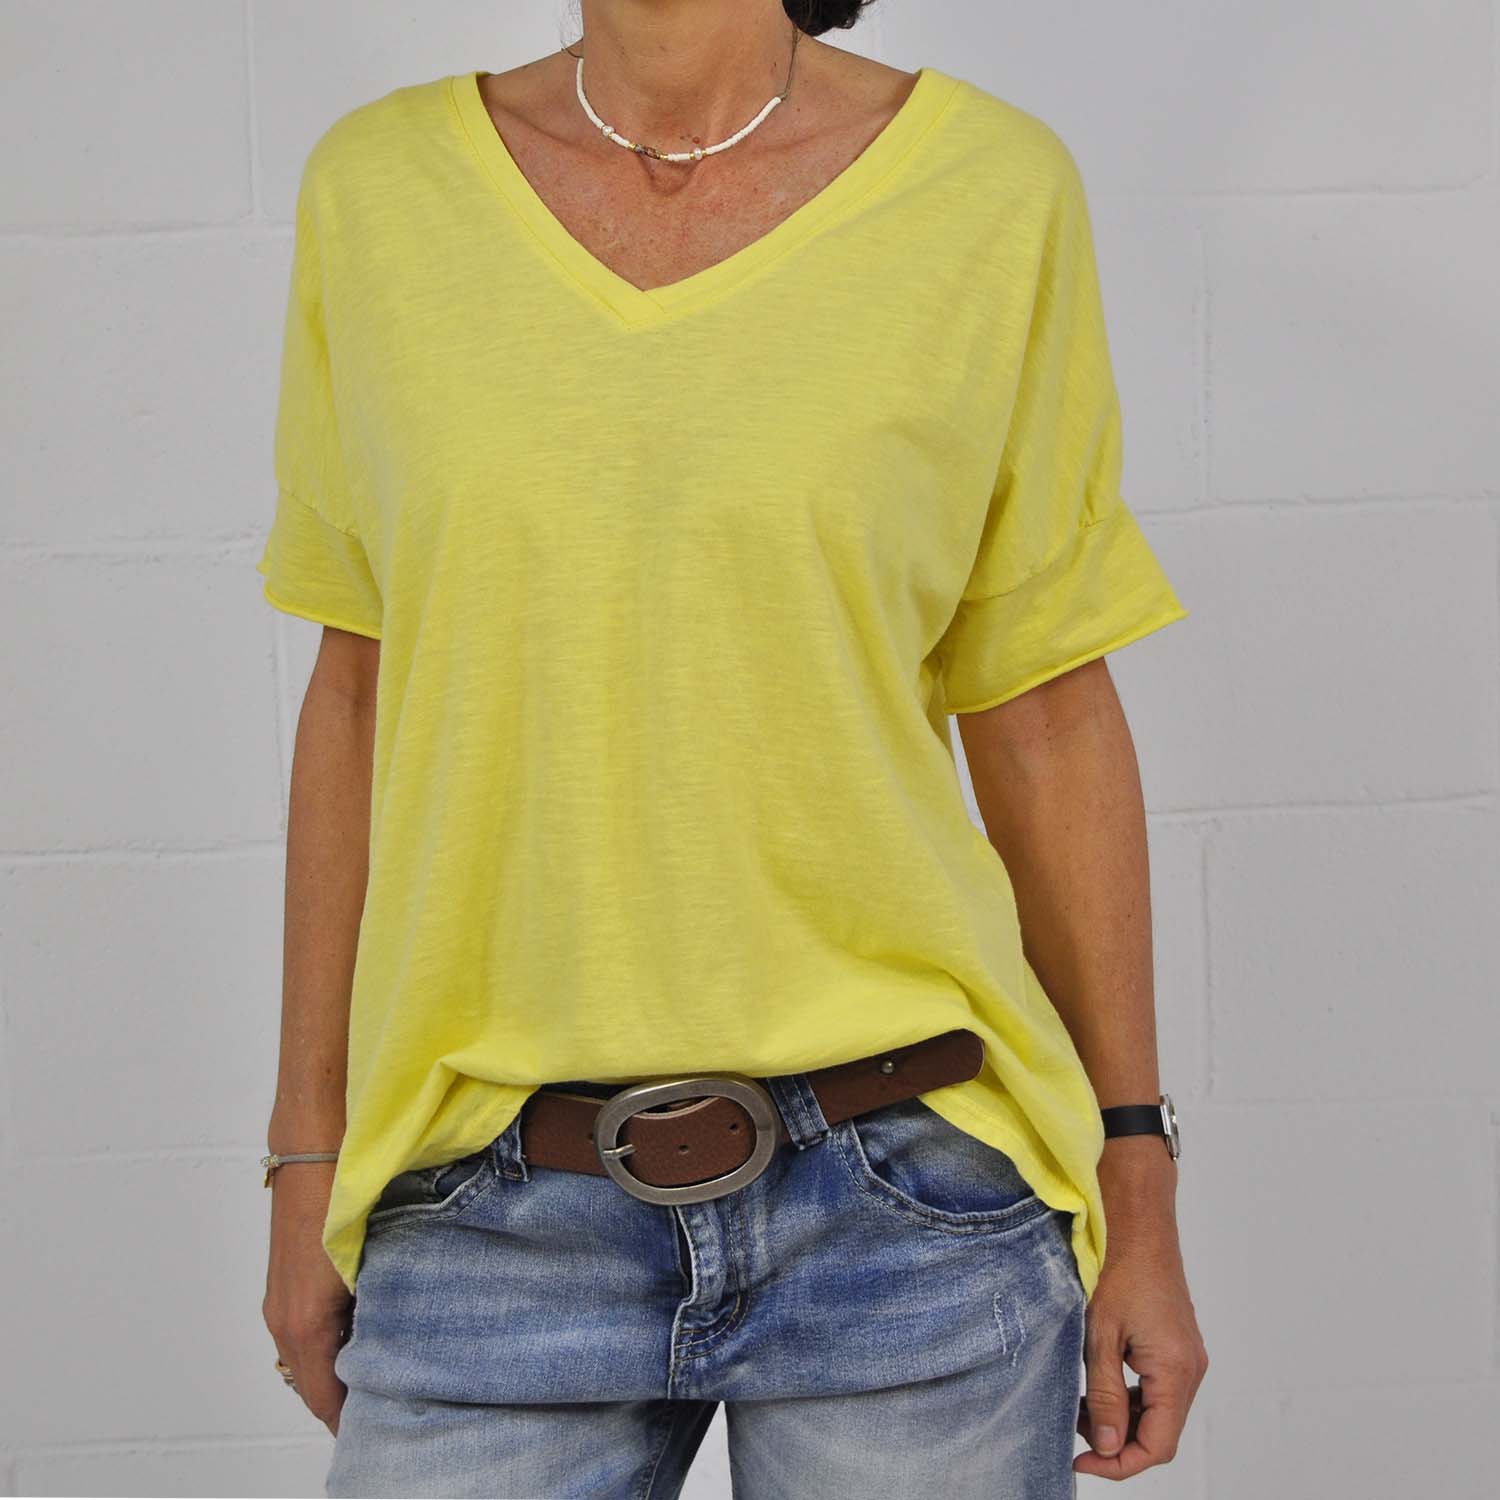 Short sleeve yellow t -shirt